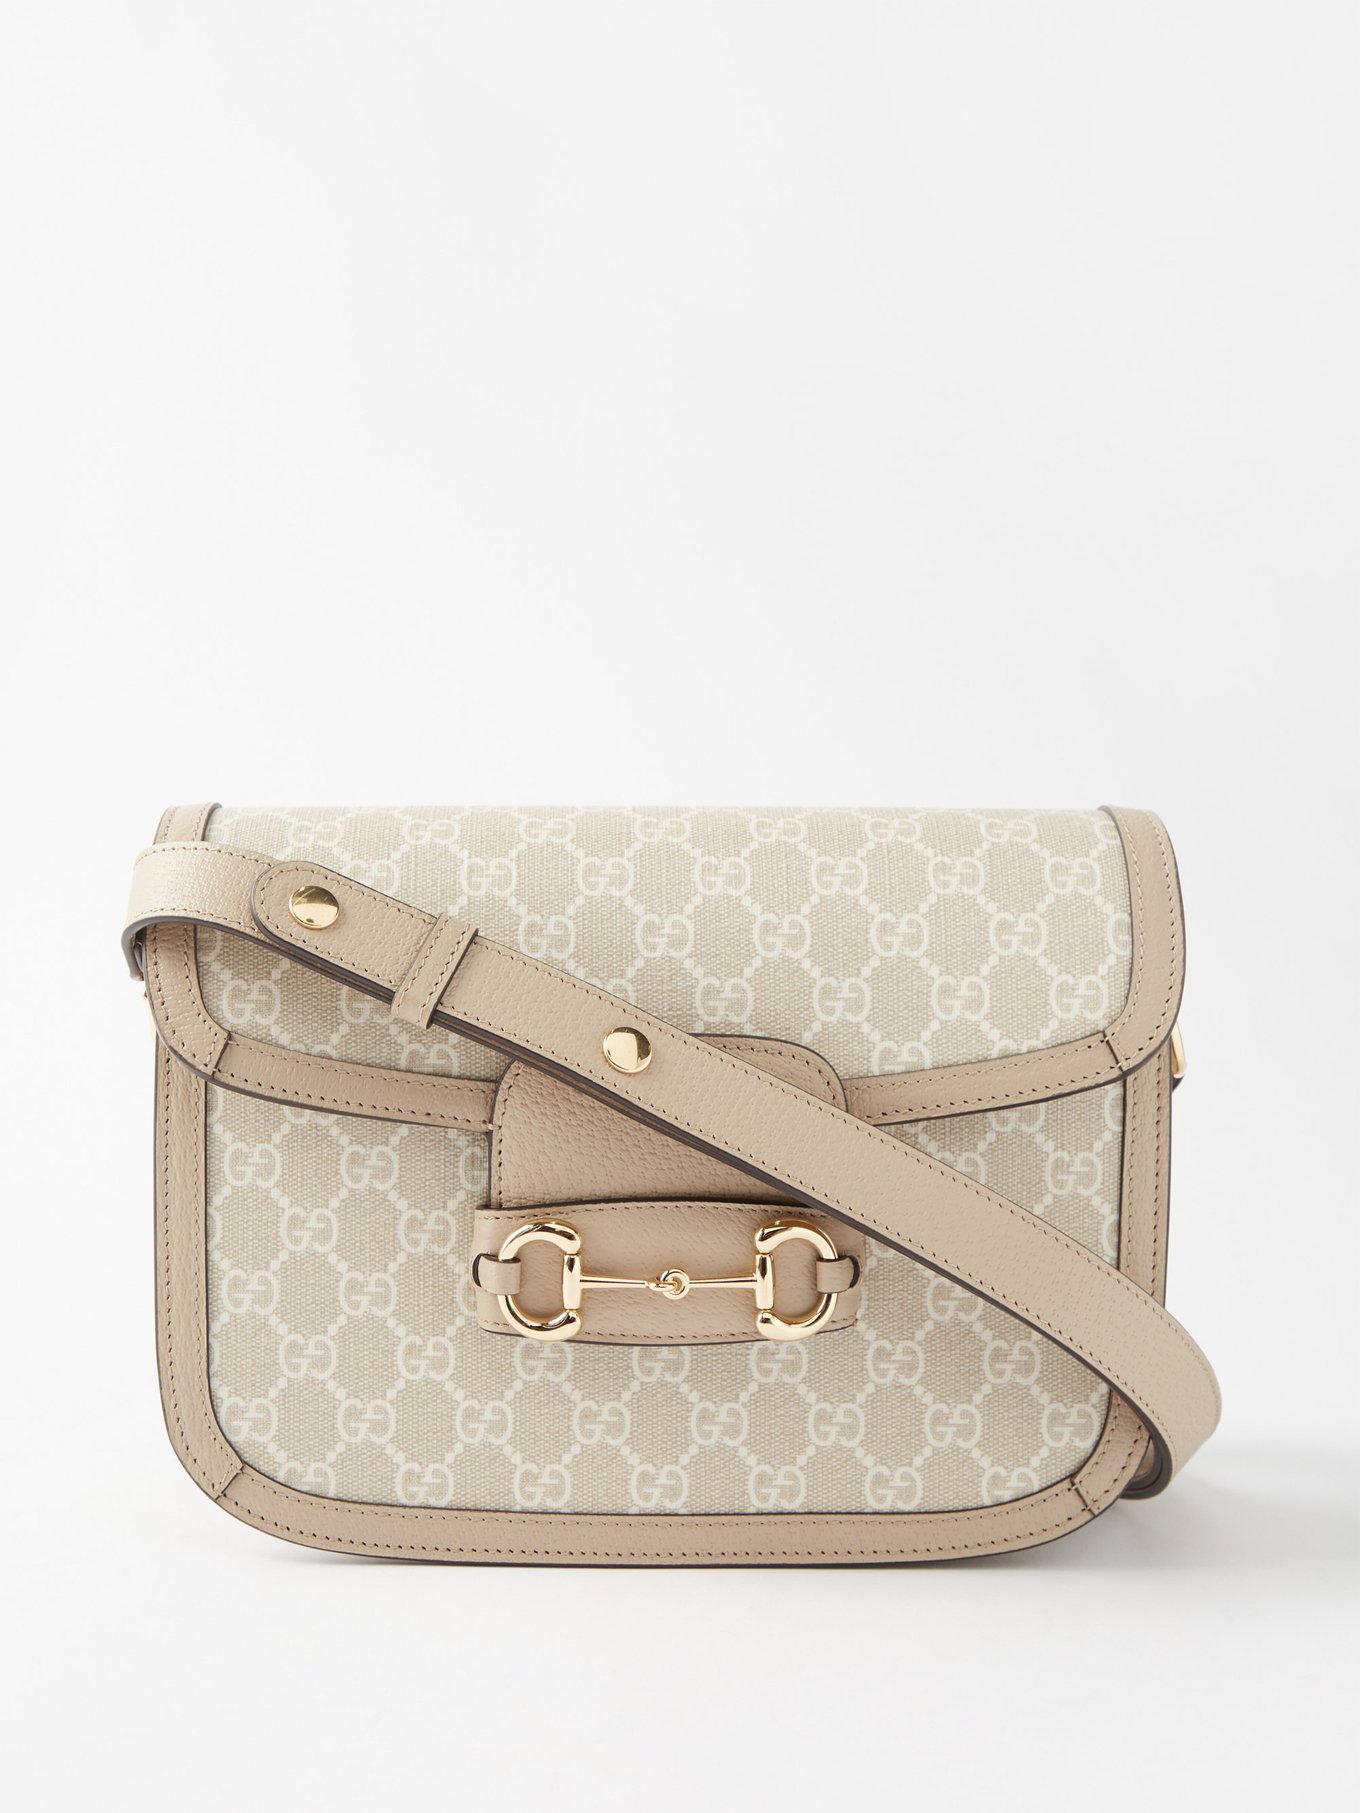 Gucci `new Horsebit` Shoulder Bag in White